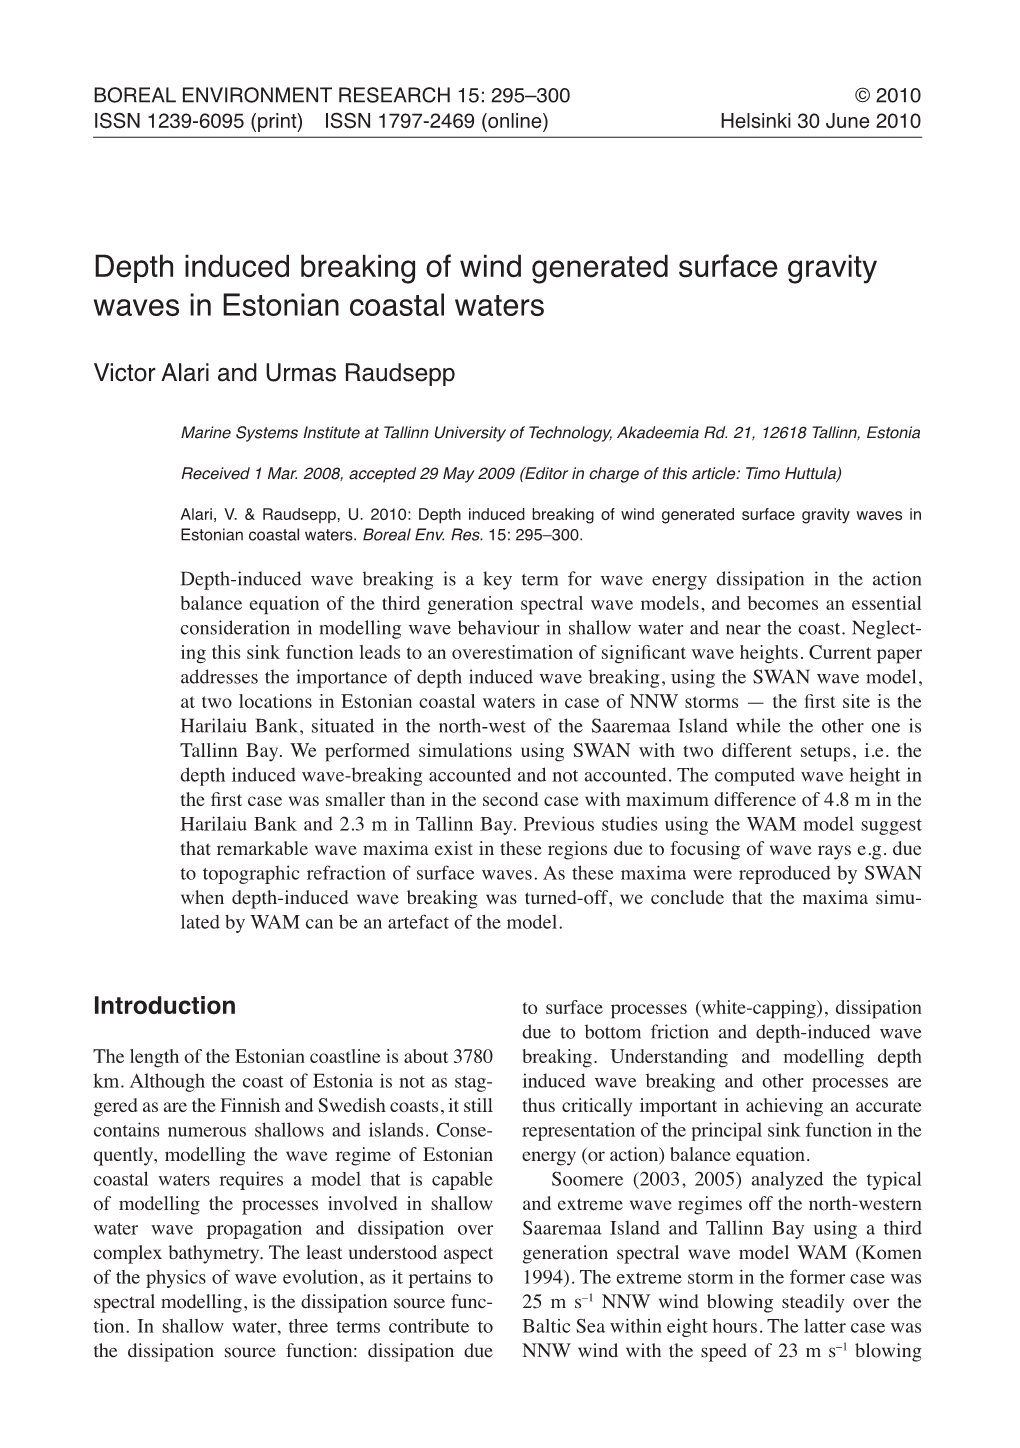 Depth Induced Breaking of Wind Generated Surface Gravity Waves in Estonian Coastal Waters